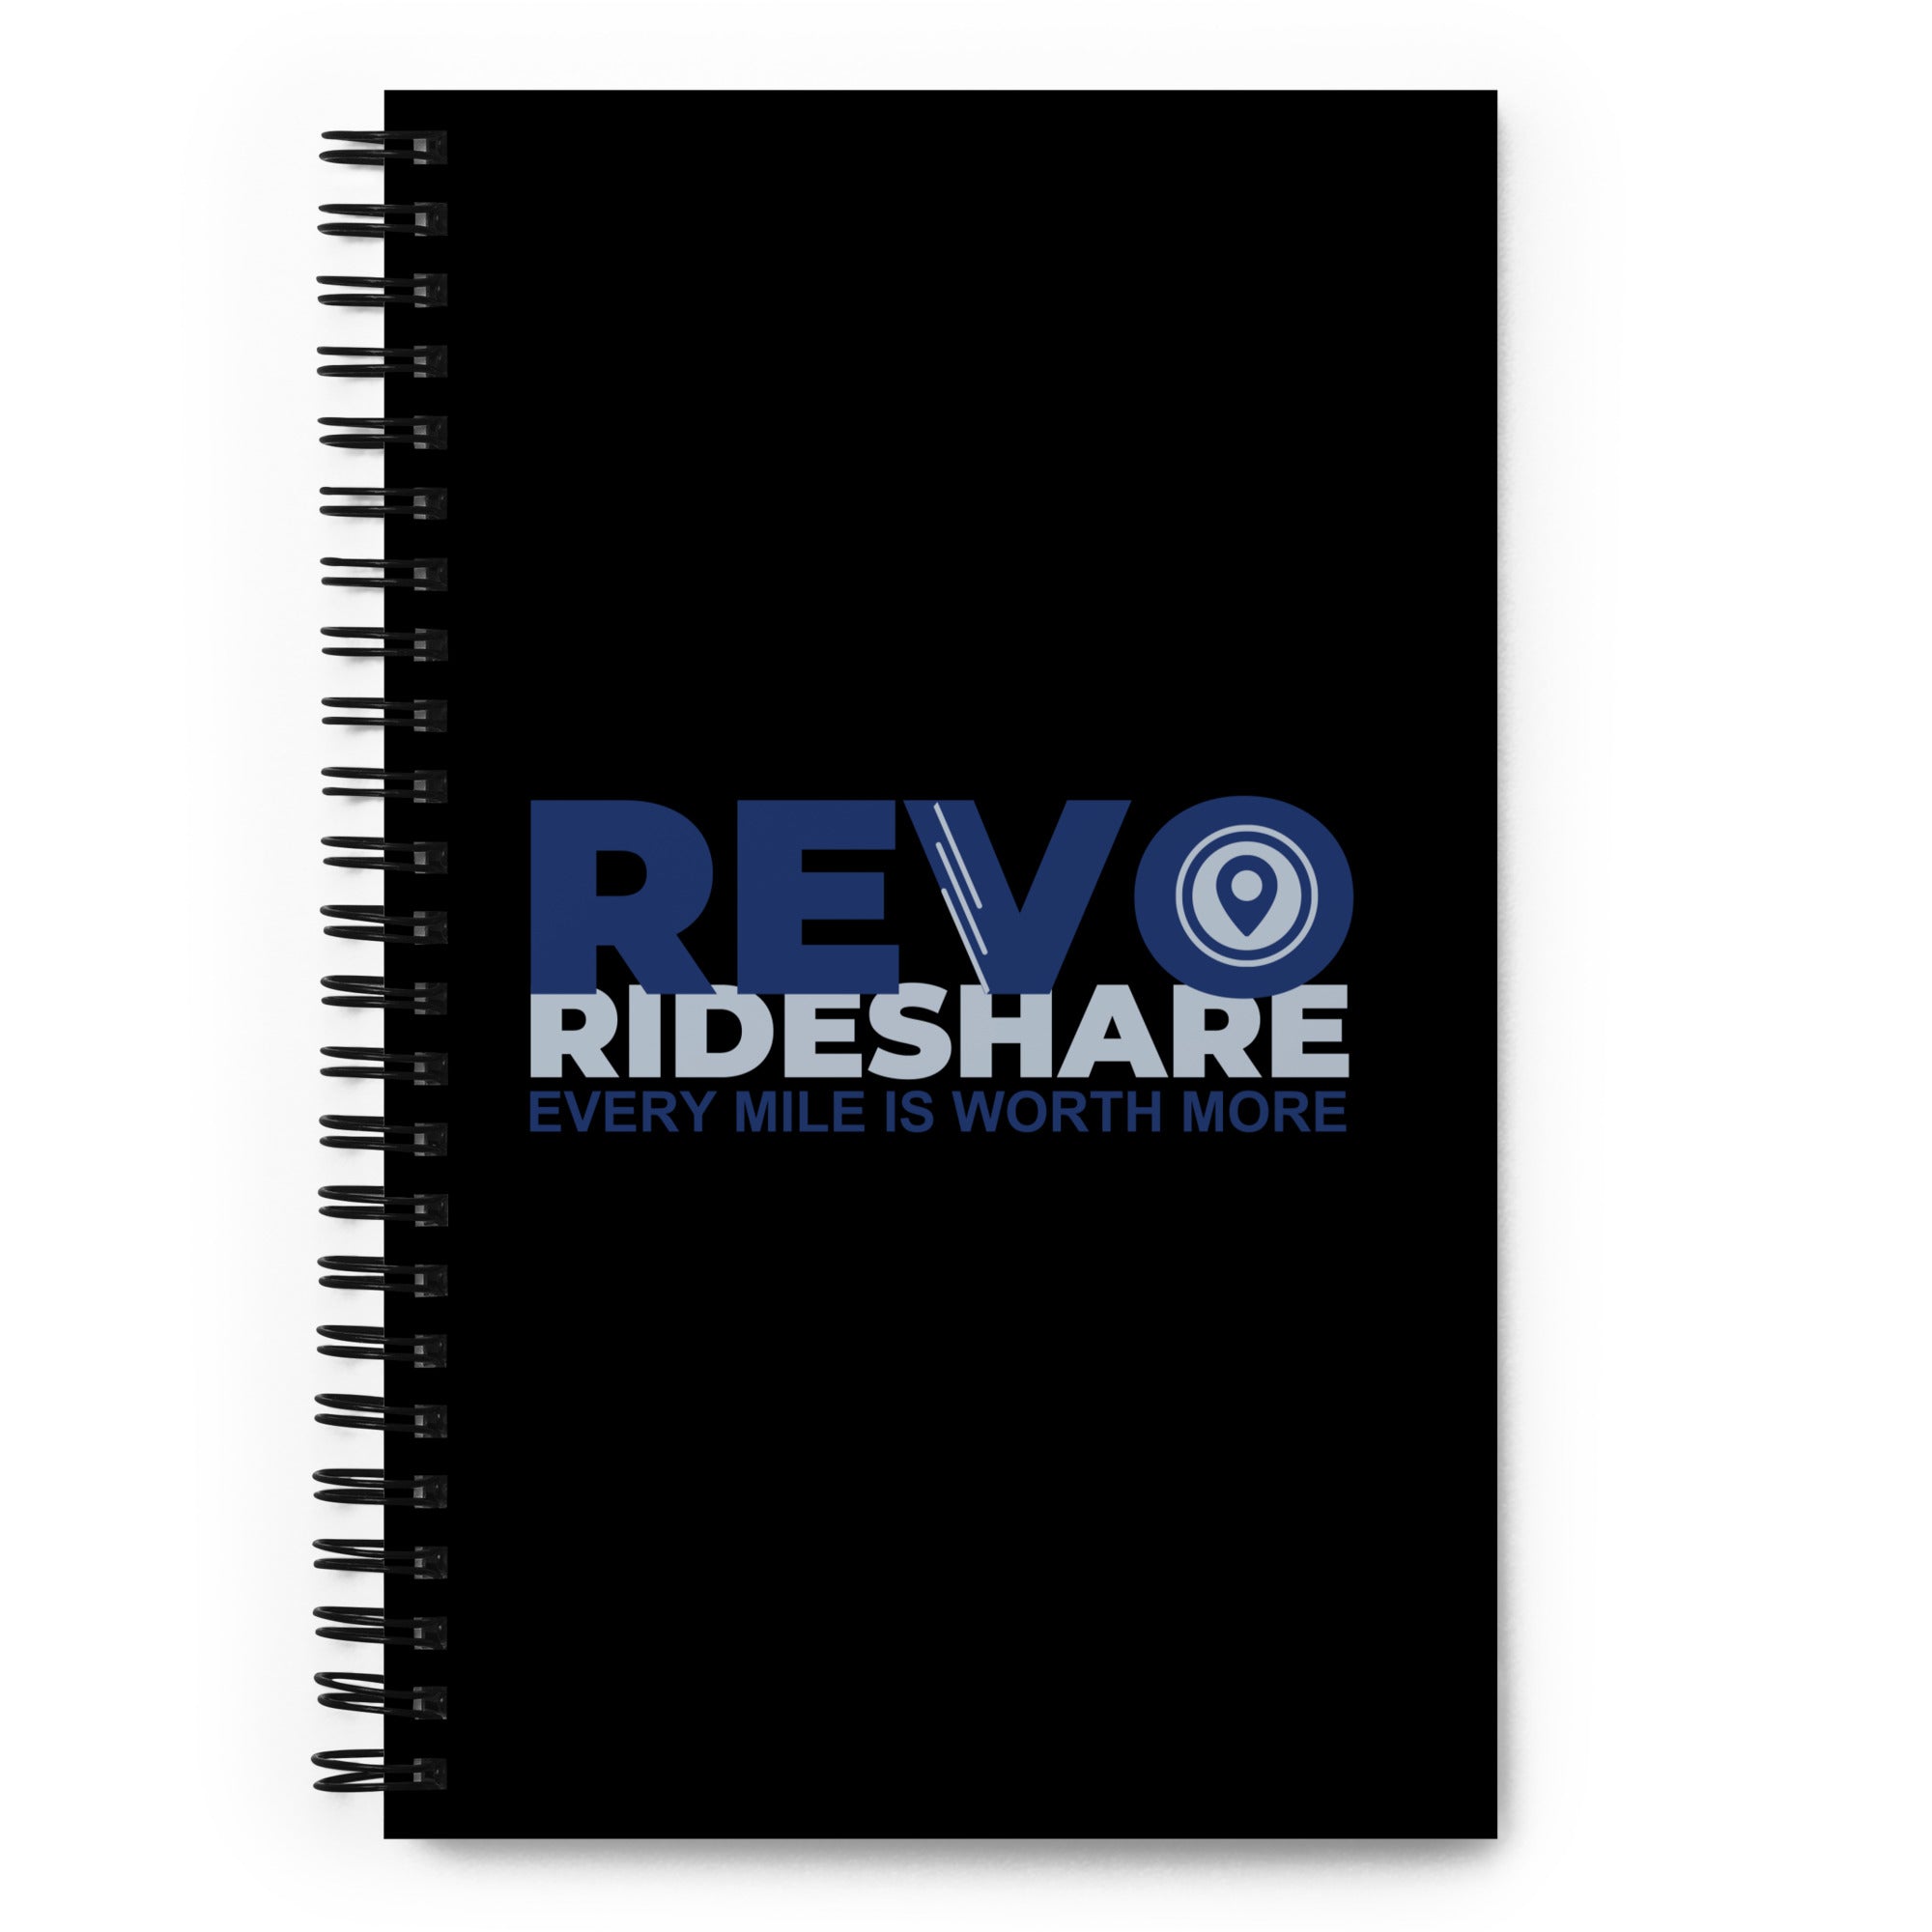 REVO Rideshare Spiral notebook